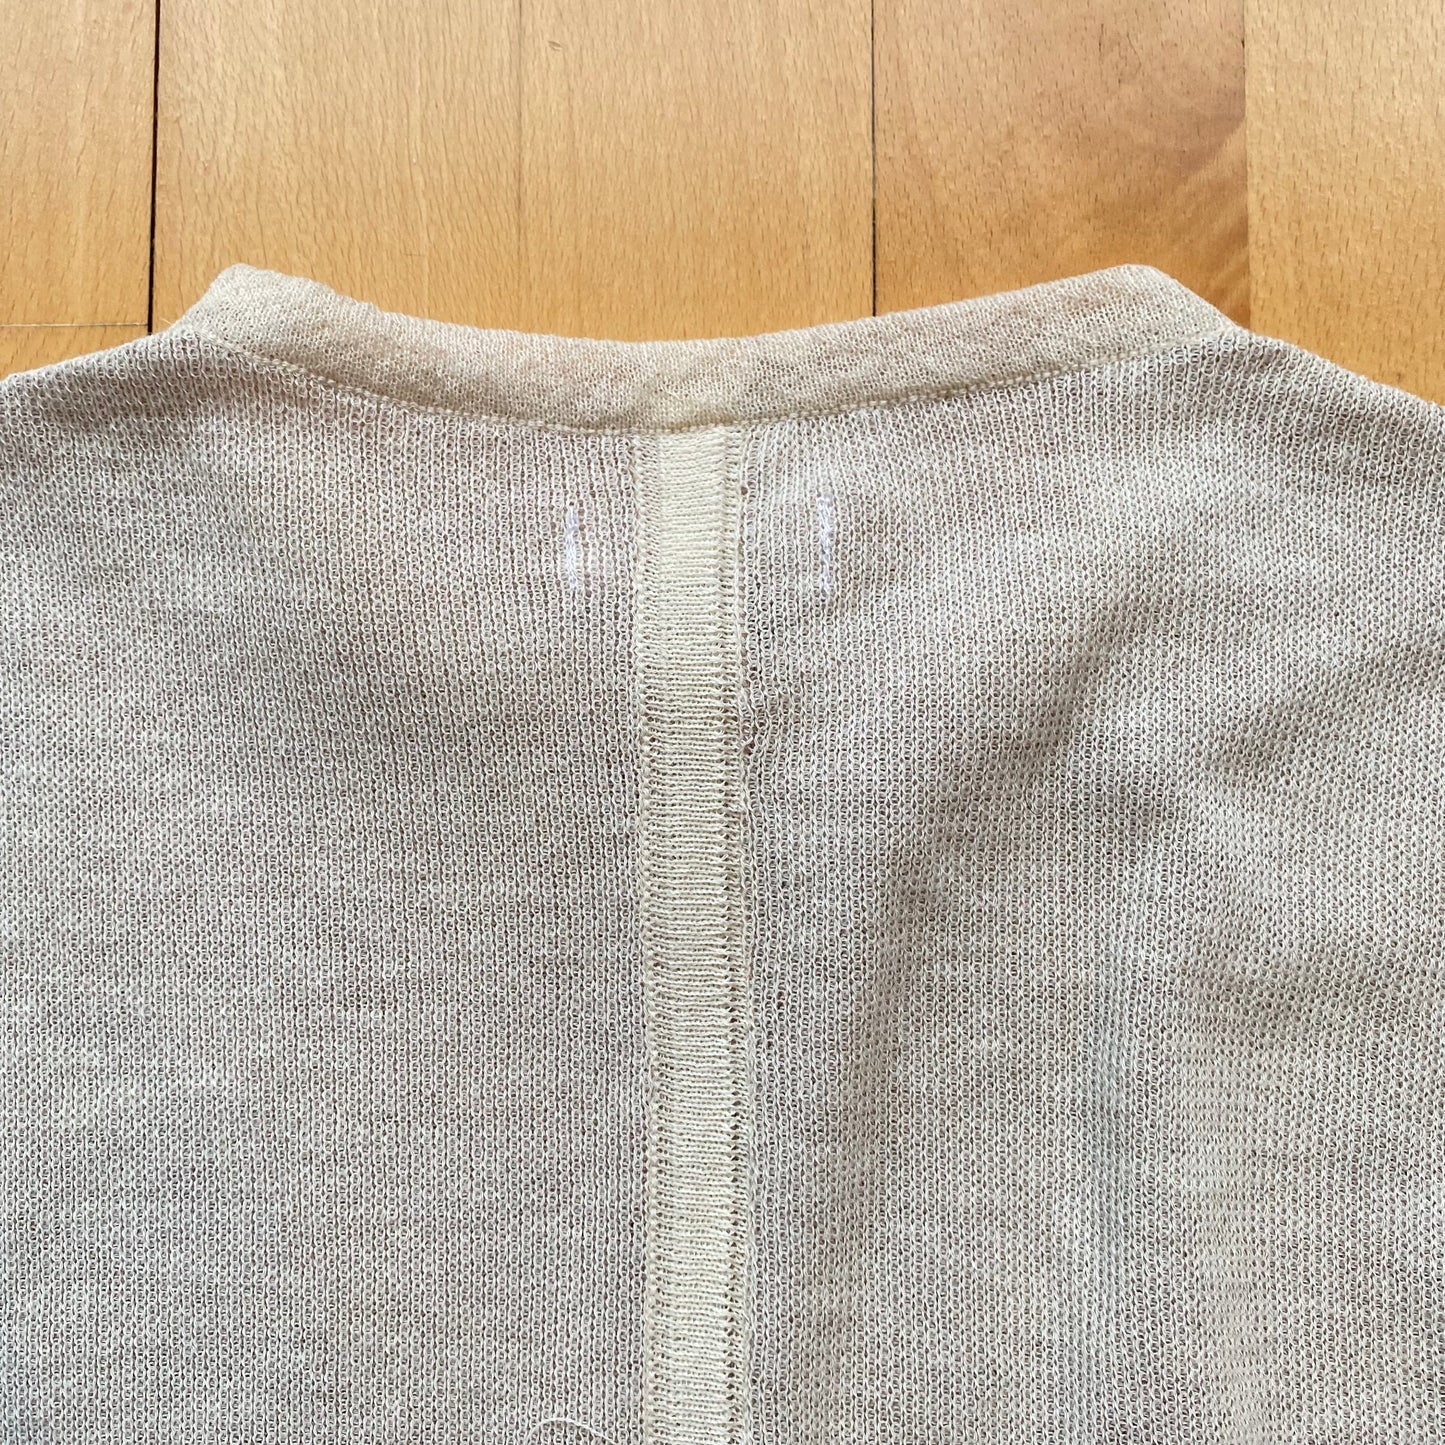 Rick Owens A/W 2005 « Moog » Sample Knit Shirt